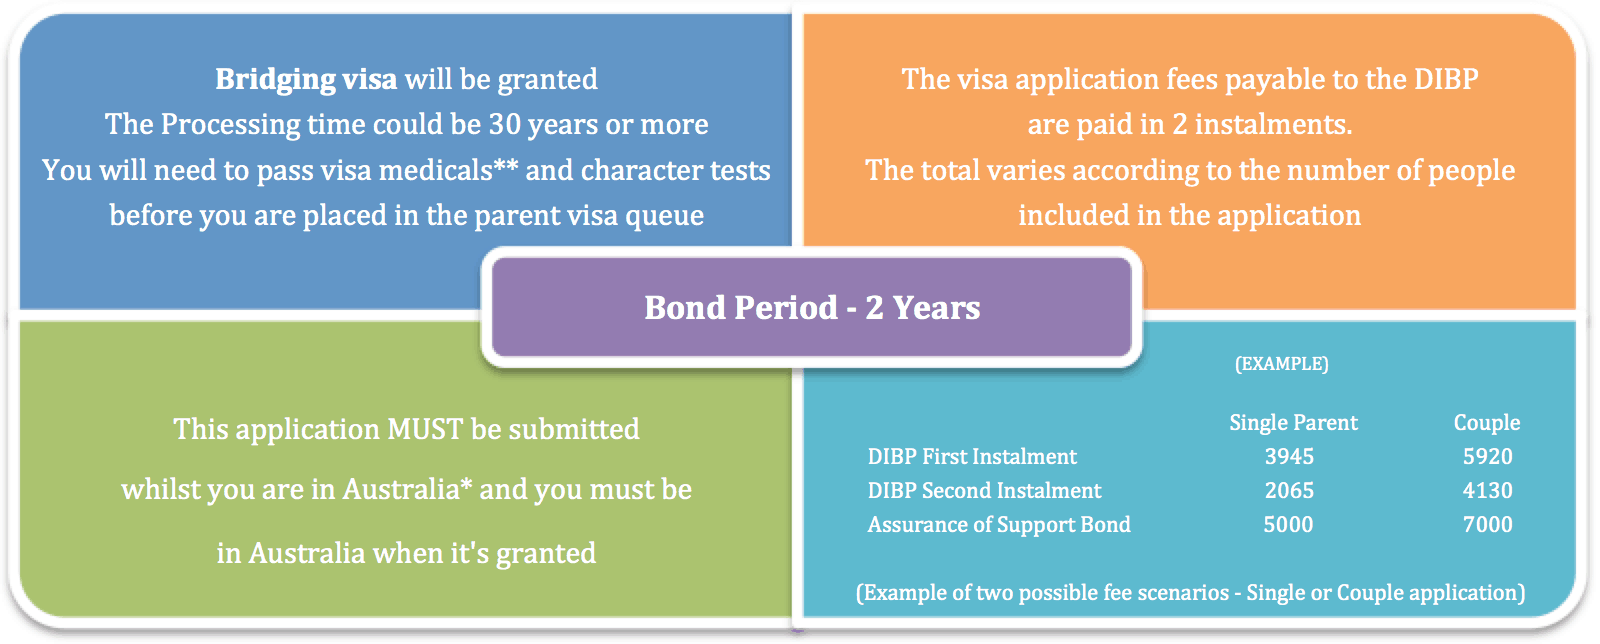 Details of Subclass 804 Visa